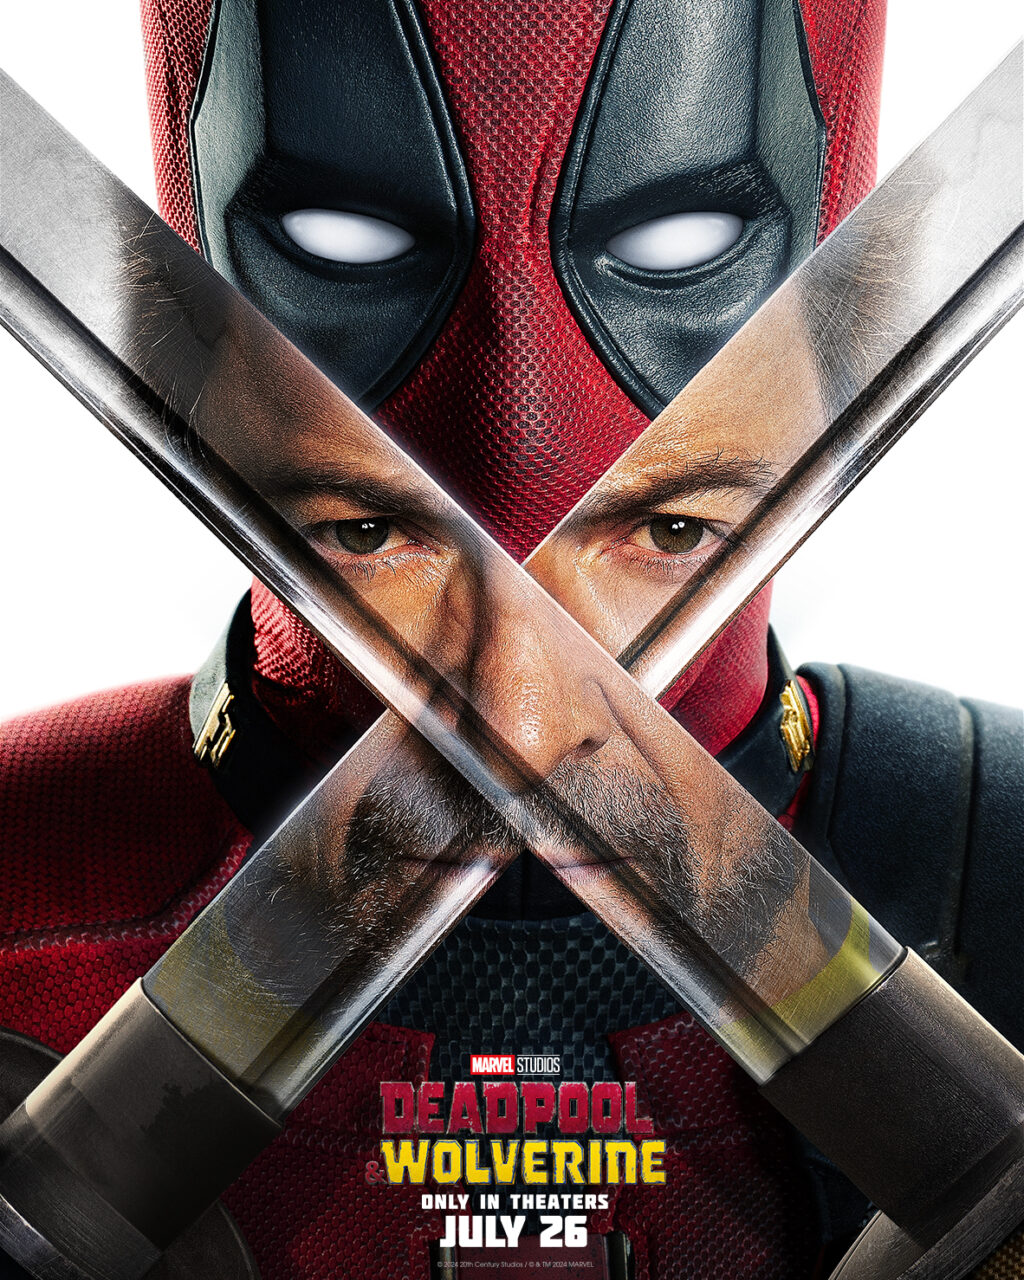 Deadpool & Wolverine poster (Marvel Studios)